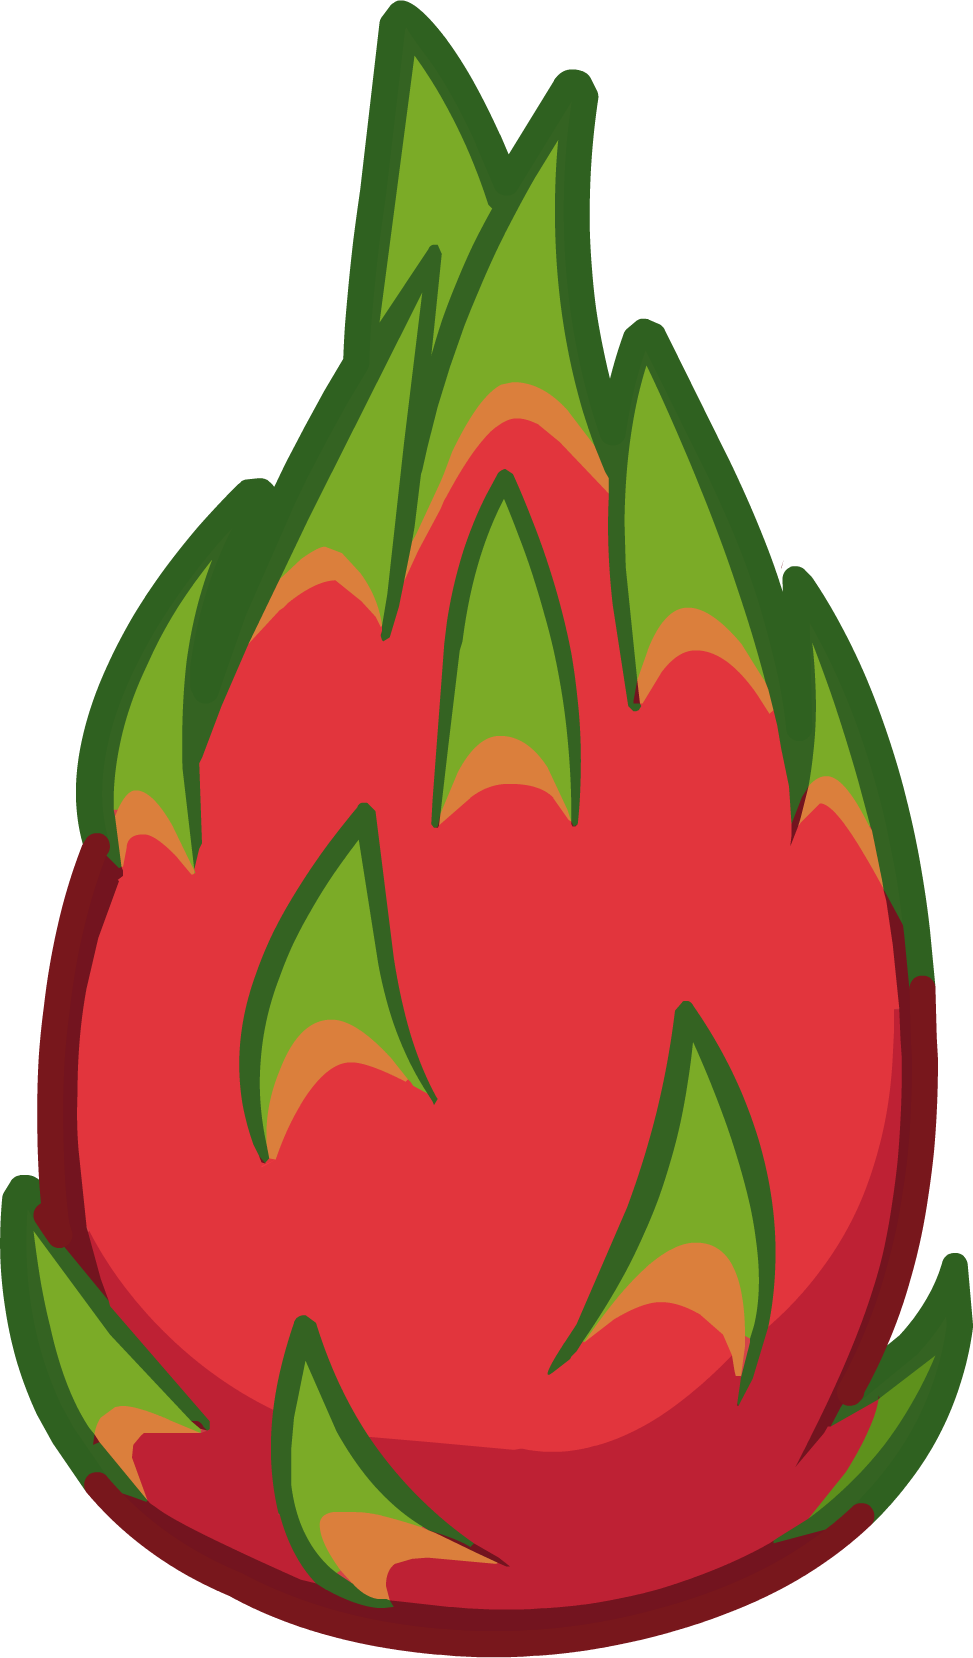 10 Dragon Fruits | Club Penguin Wiki | Fandom powered by Wikia